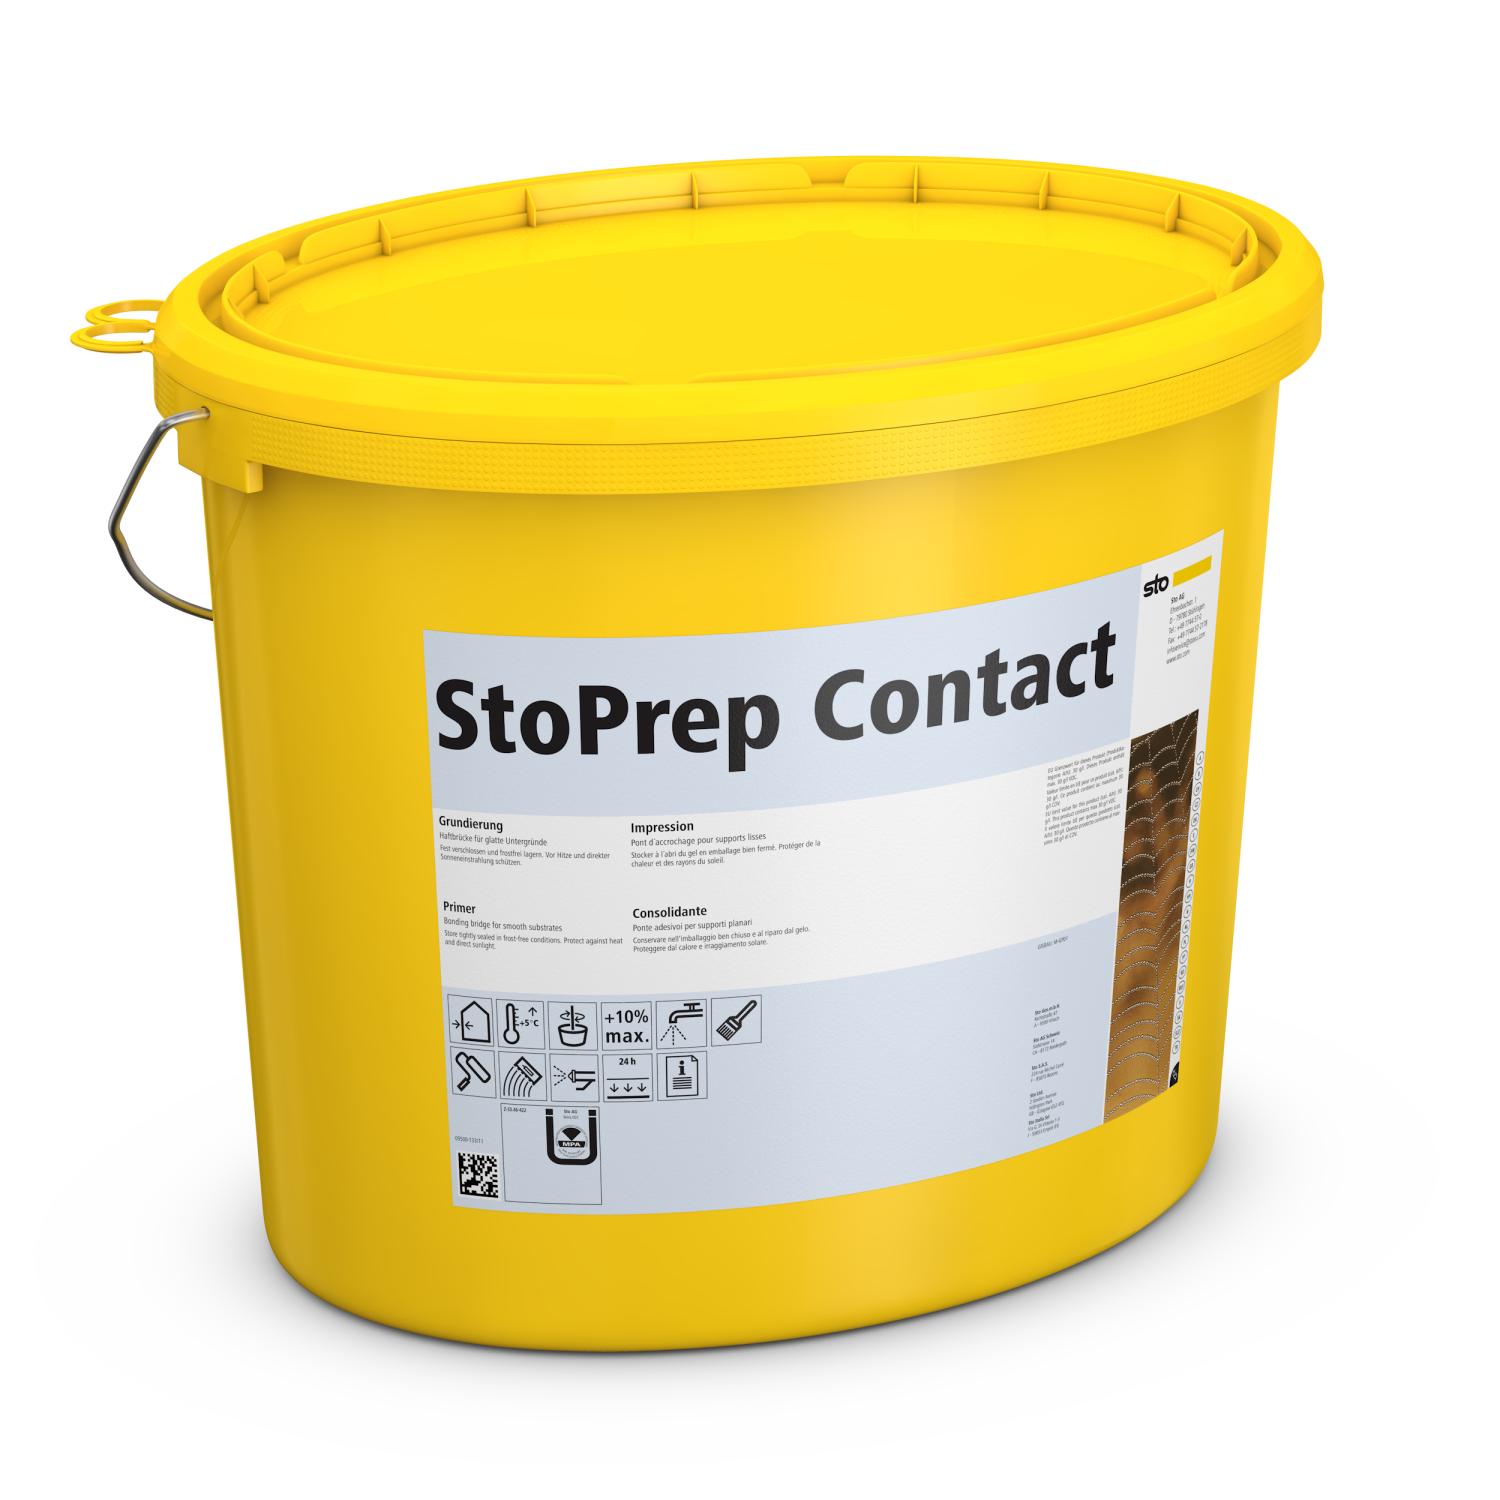 StoPrep Contact